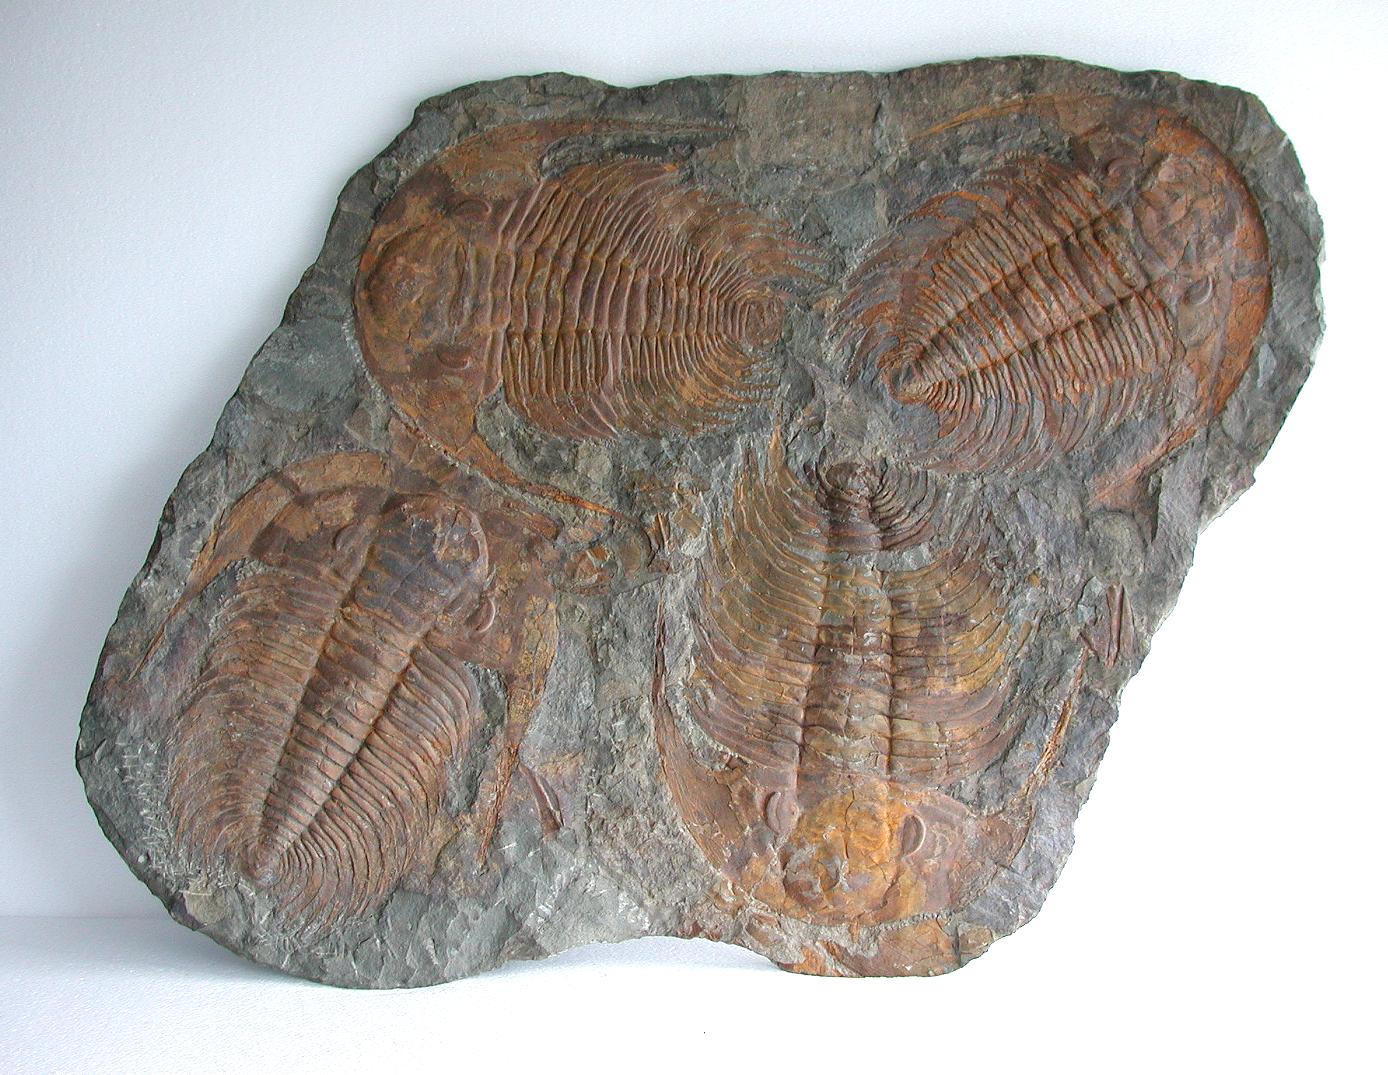 A Large Multiple Paradoxides Trilobite Fossil Plaque (Ex. Christie's) - Image 2 of 9